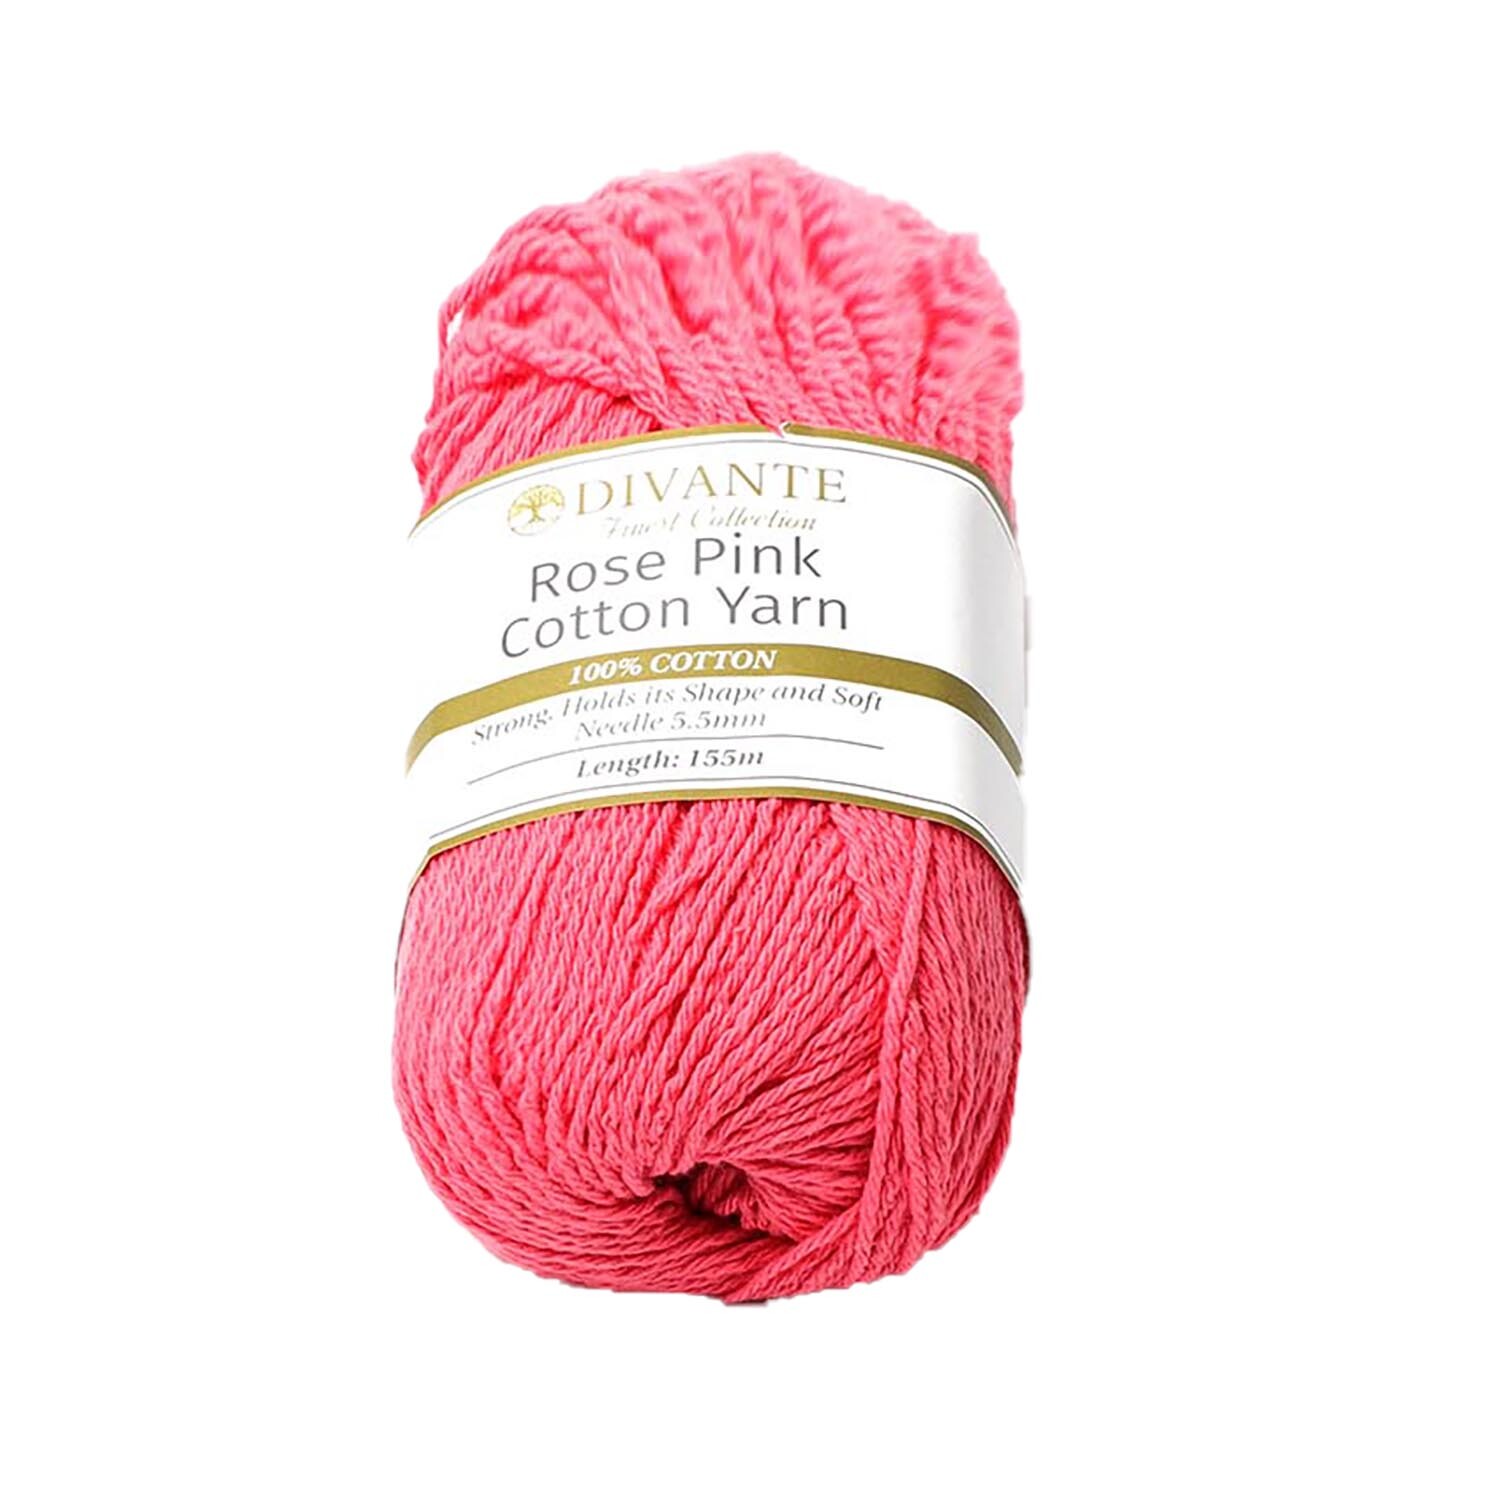 Divante Rose Pink Cotton Yarn 100g Image